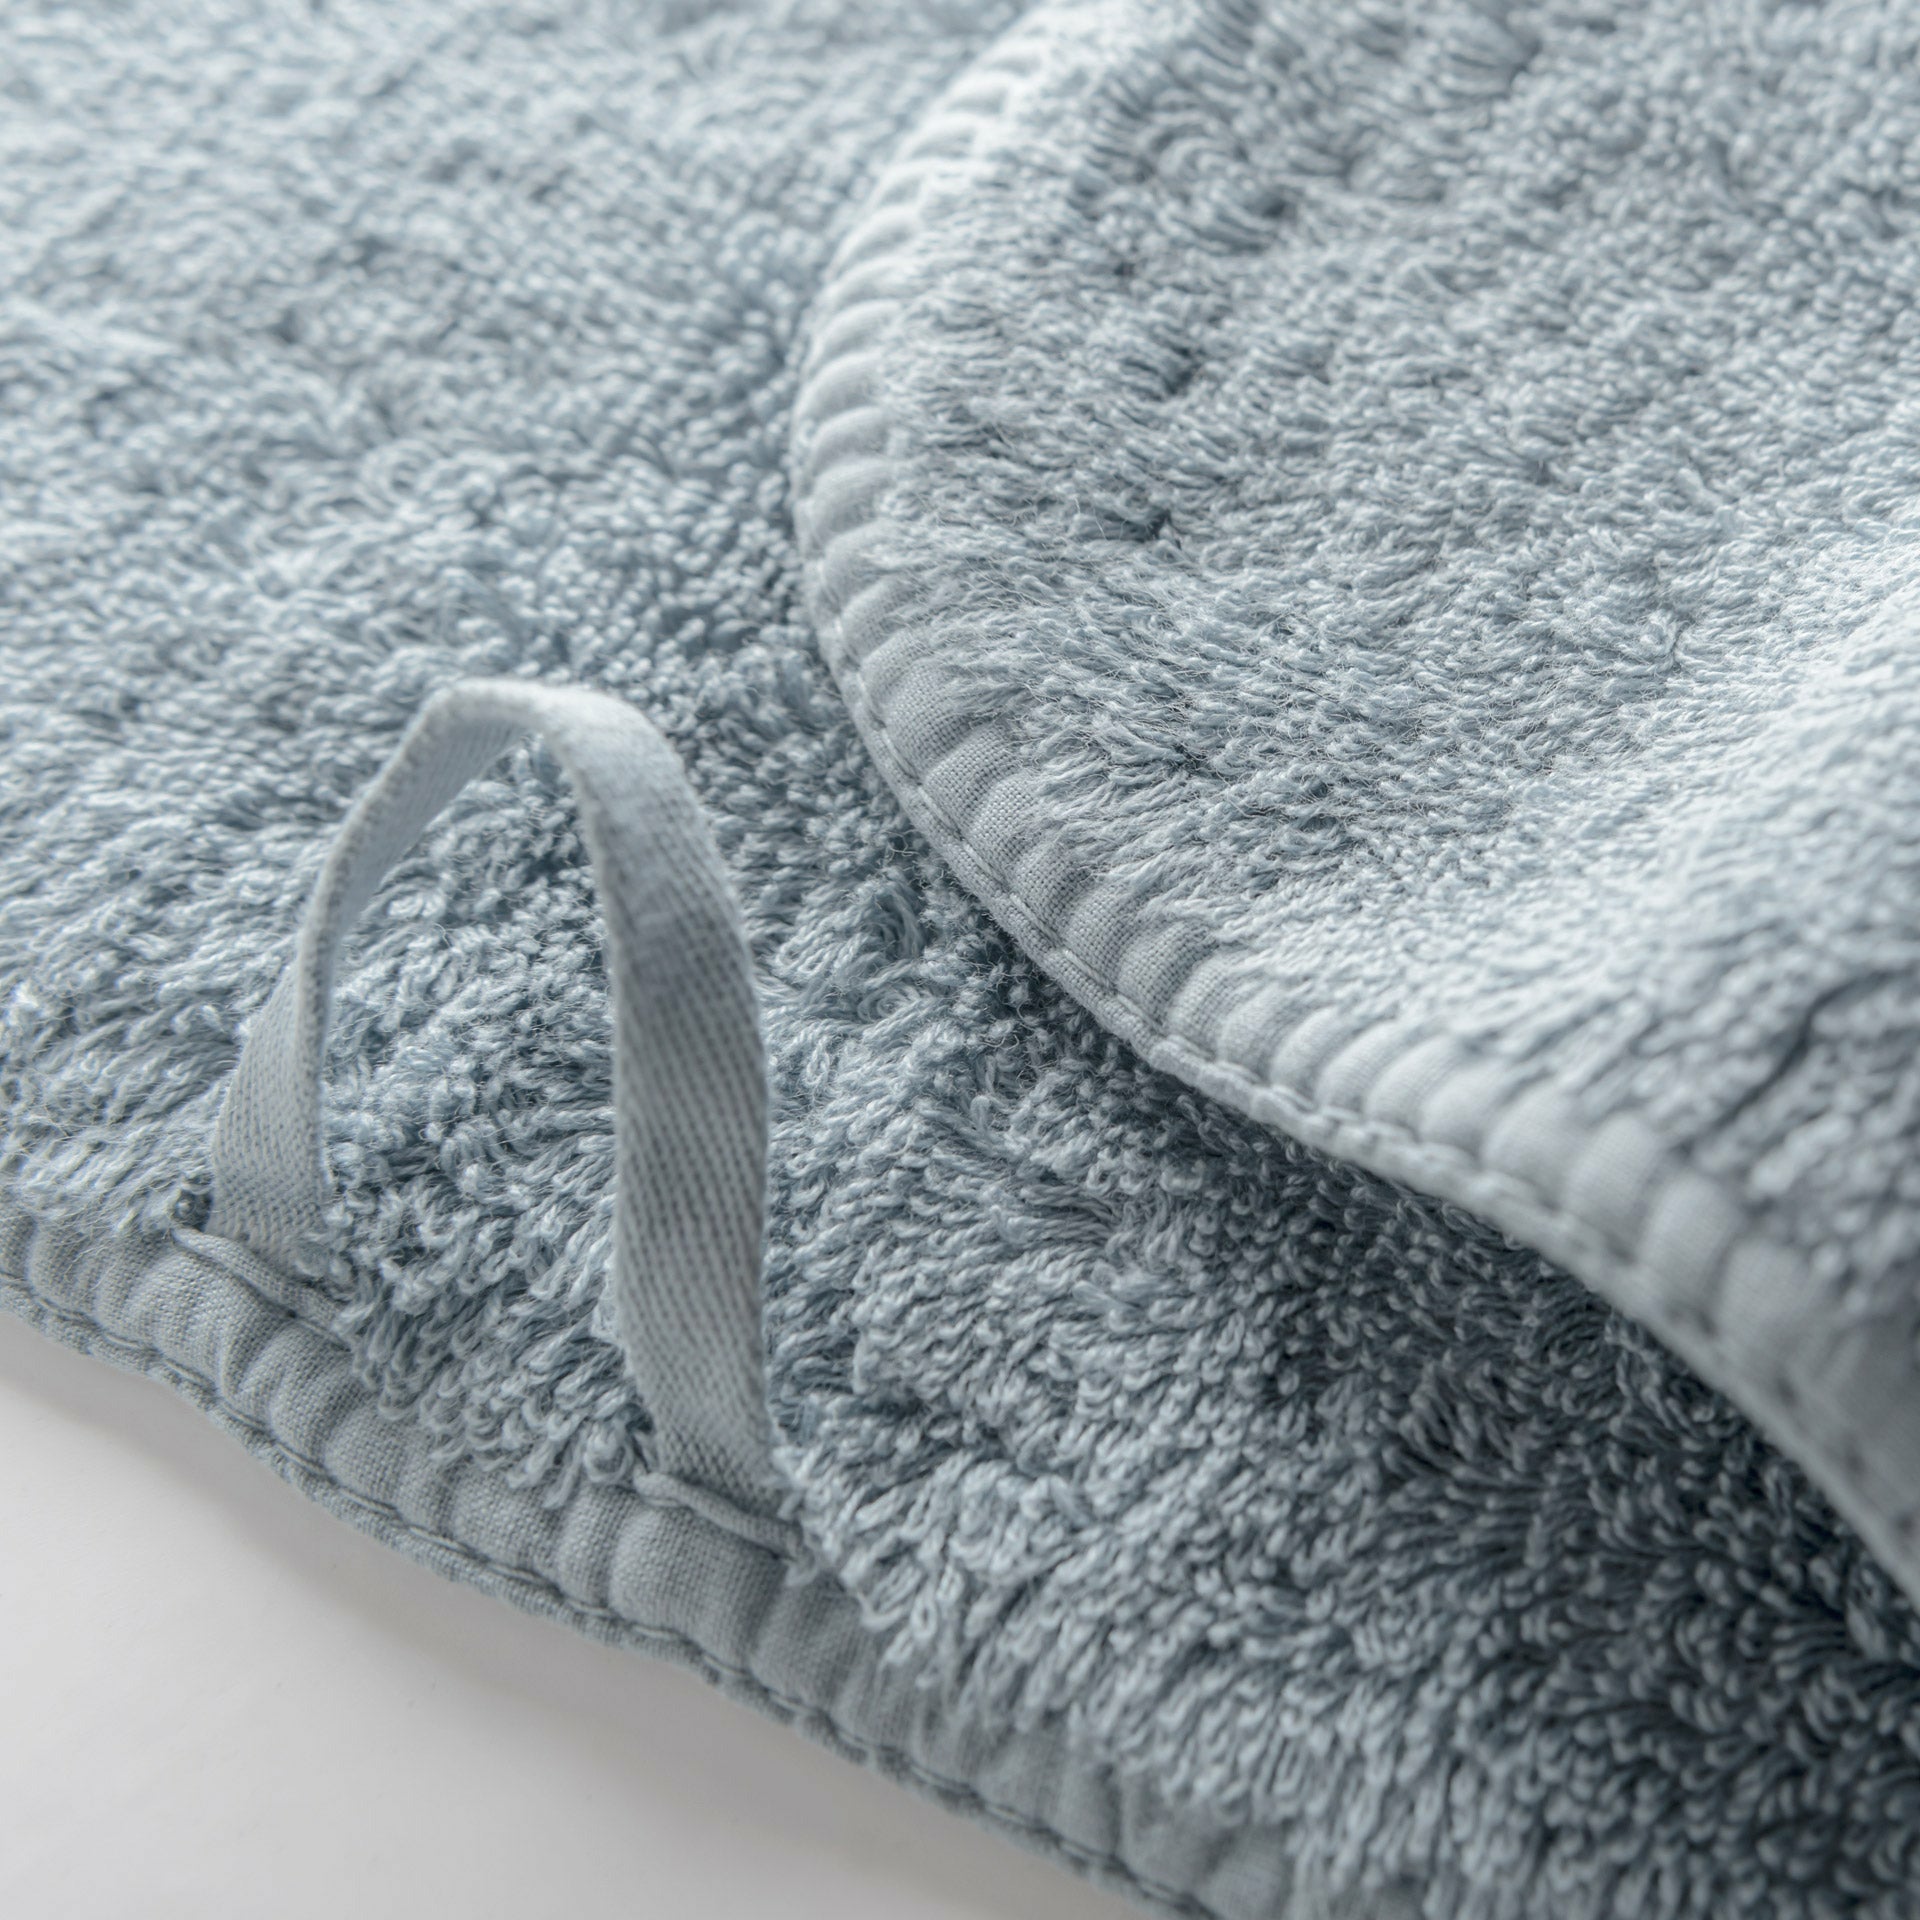 Graccioza Long Double Loop Luxury Bath Towels (Tile)